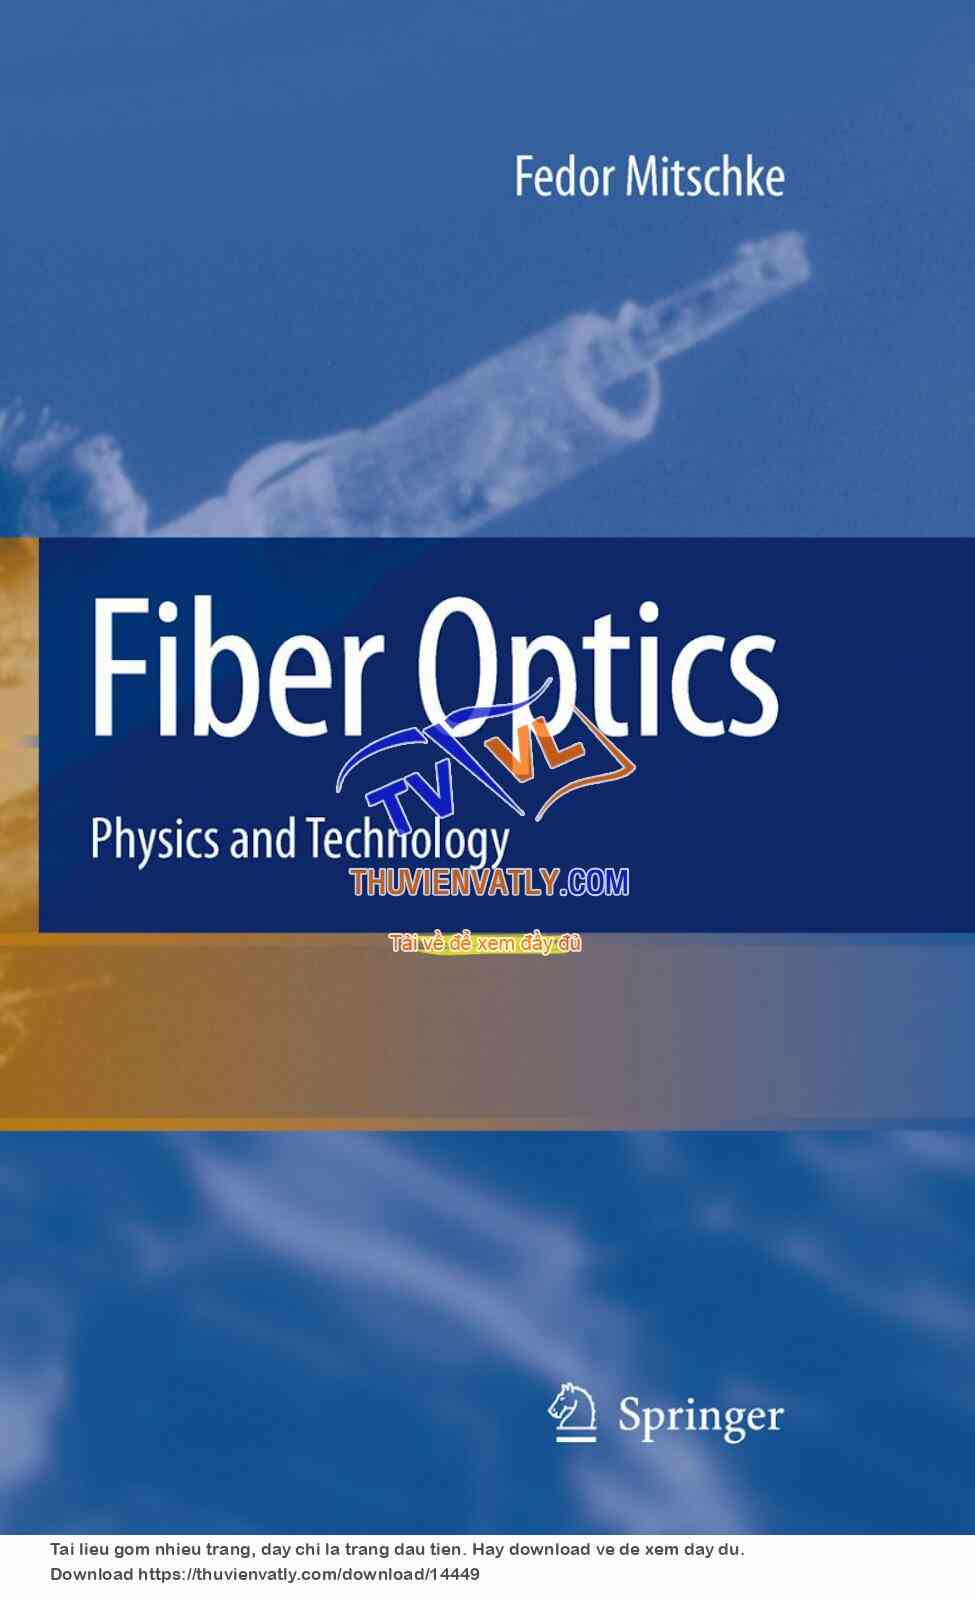 Fiber Optics - Physics and Technology (Fedor Mitschke, Springer 2010)